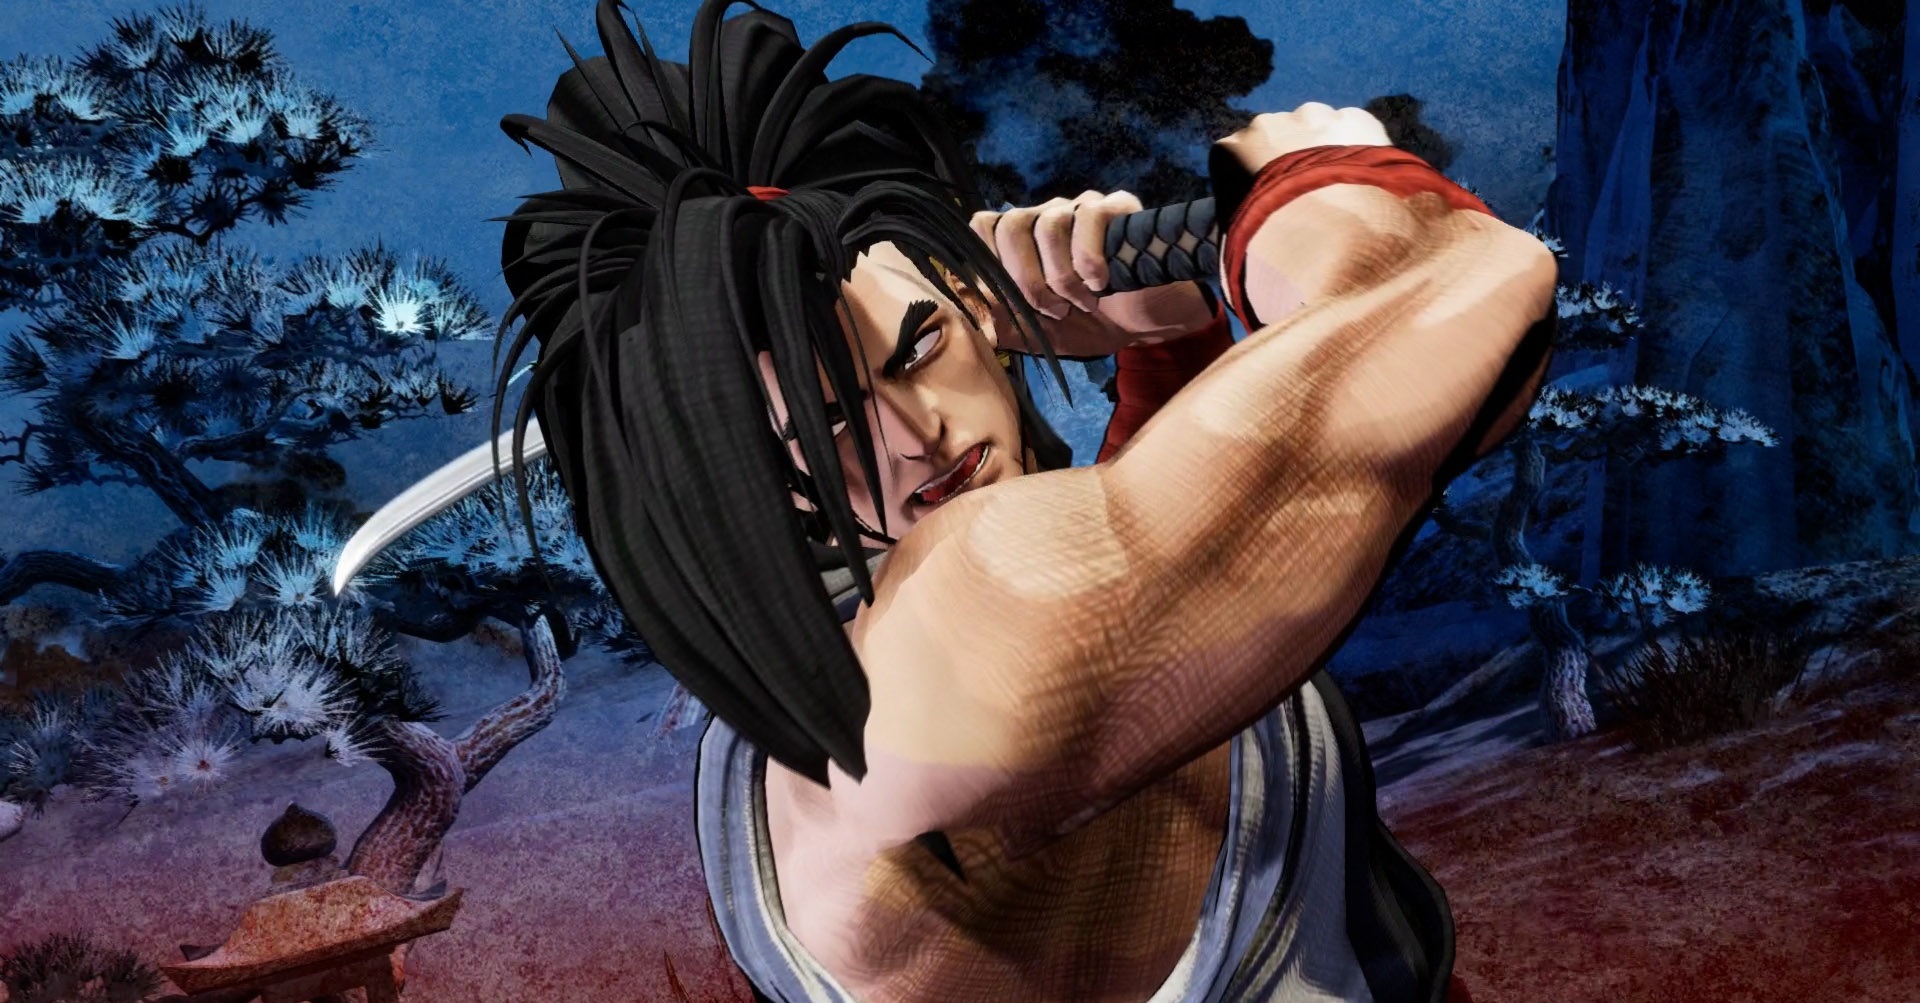 SNK Announces Samurai Shodown for PlayStation 4